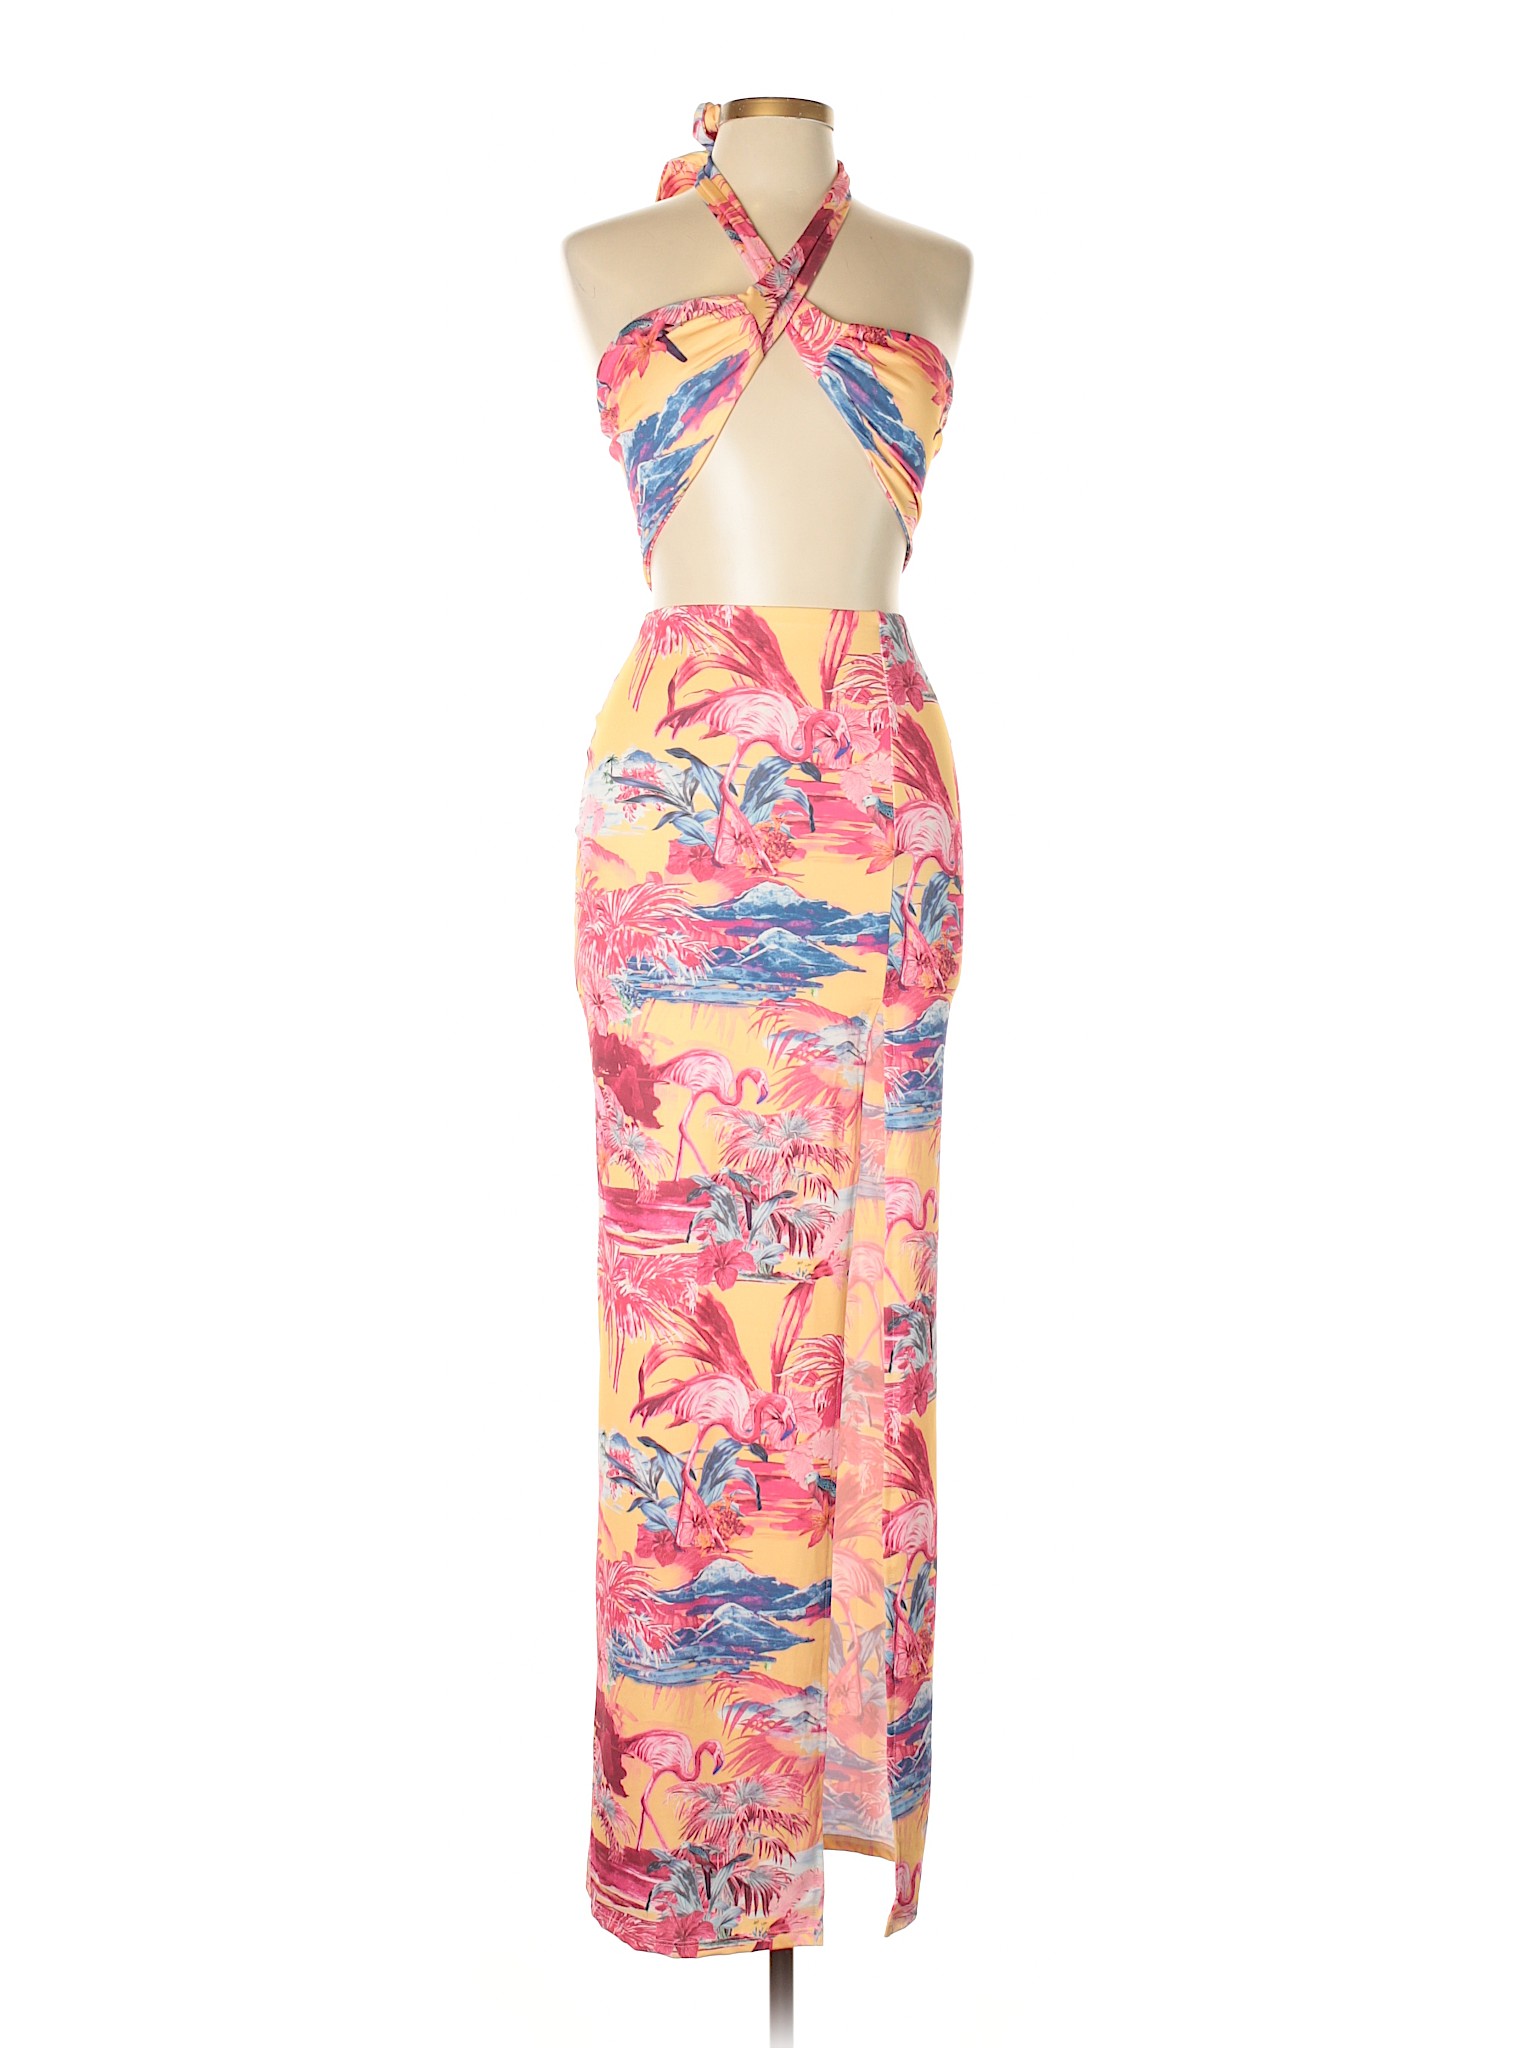 ASOS Tropical Pink Casual Dress Size 4 - 47% off | thredUP